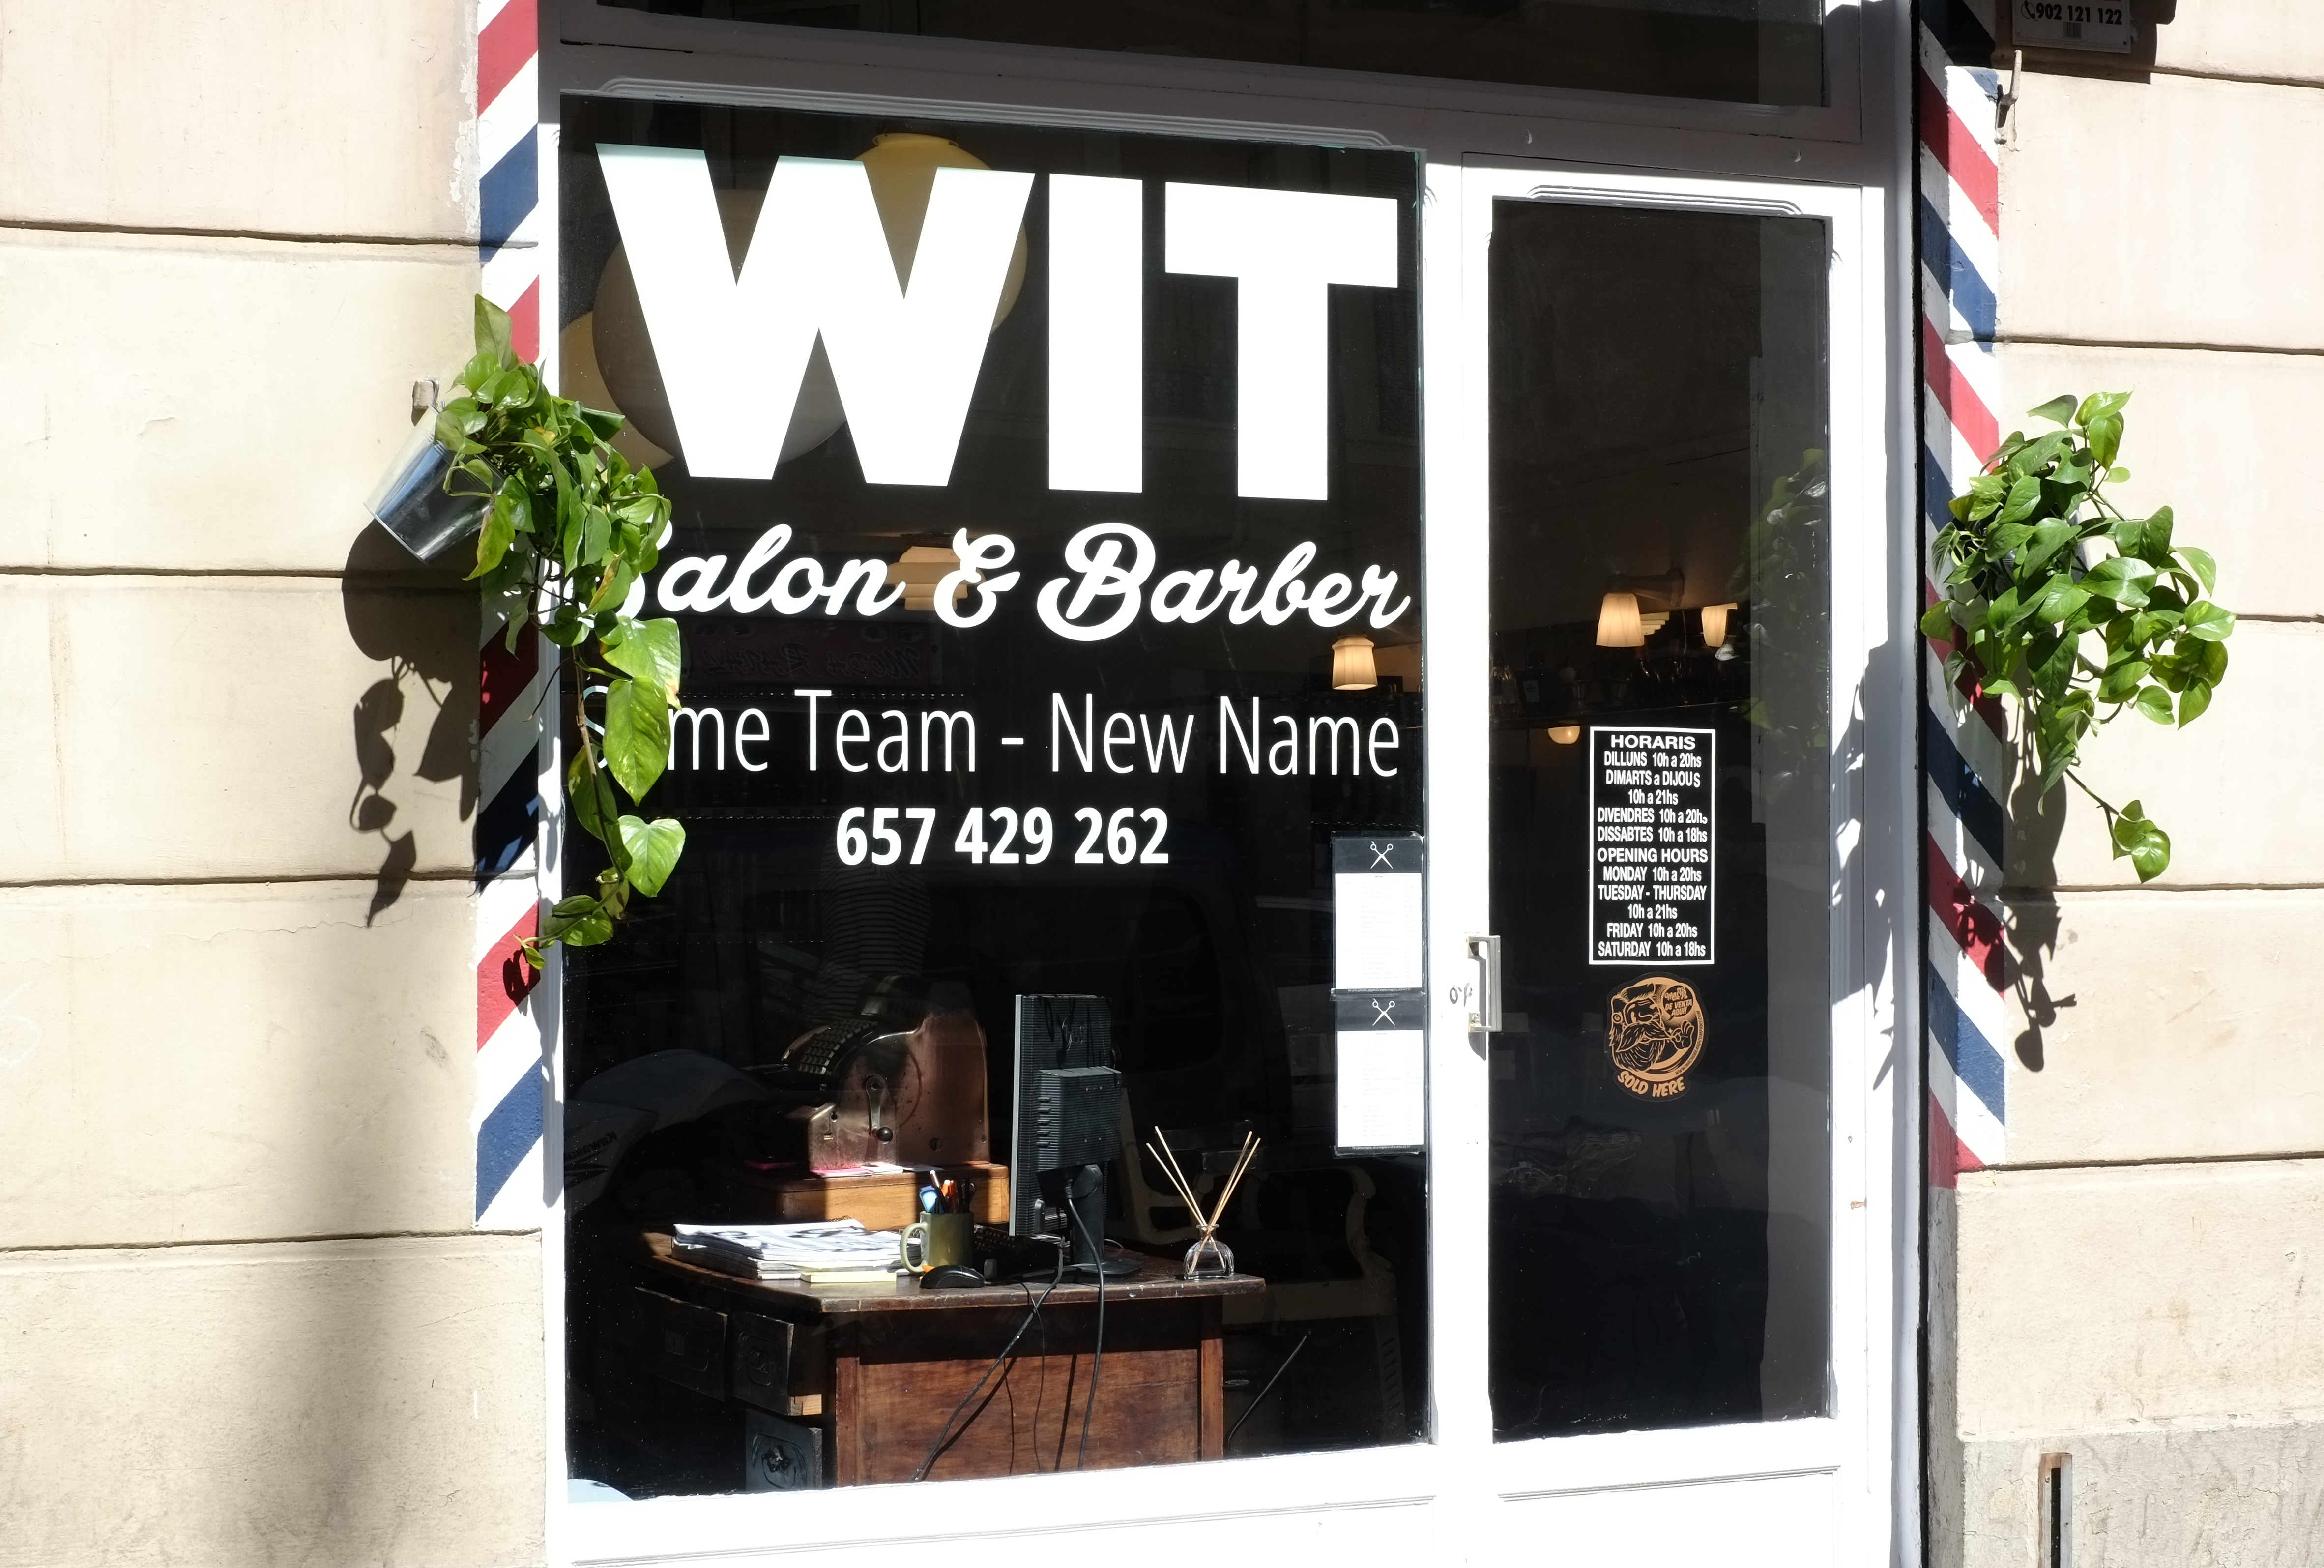 acuut vrede binnenkort Who are Wit Salon & Barber? | Hair Academy